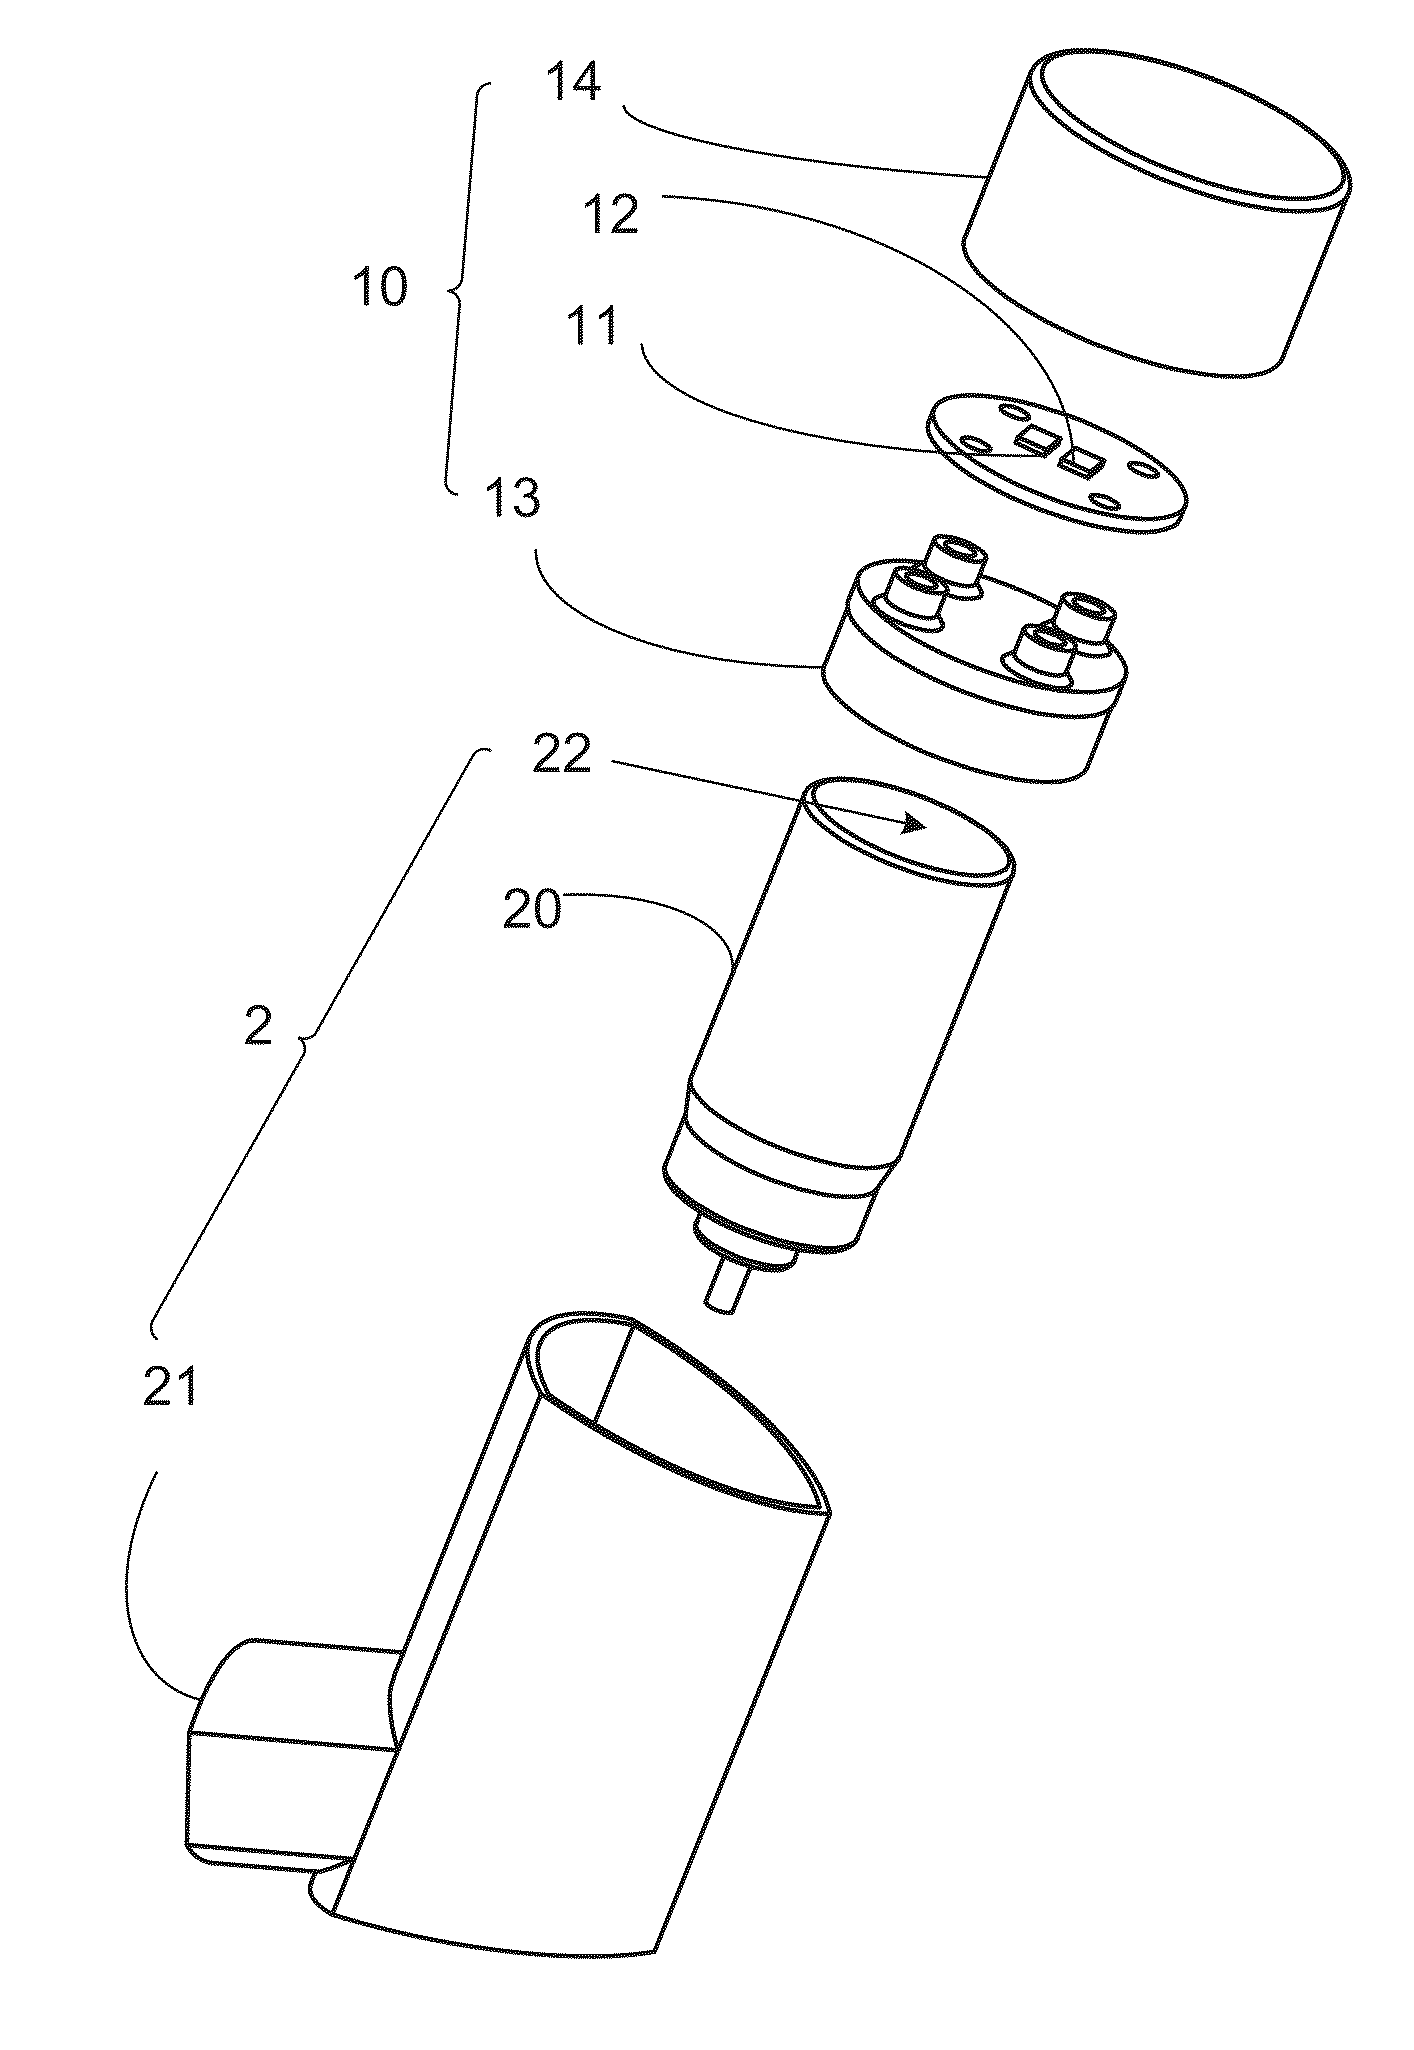 Medication recording apparatus and method